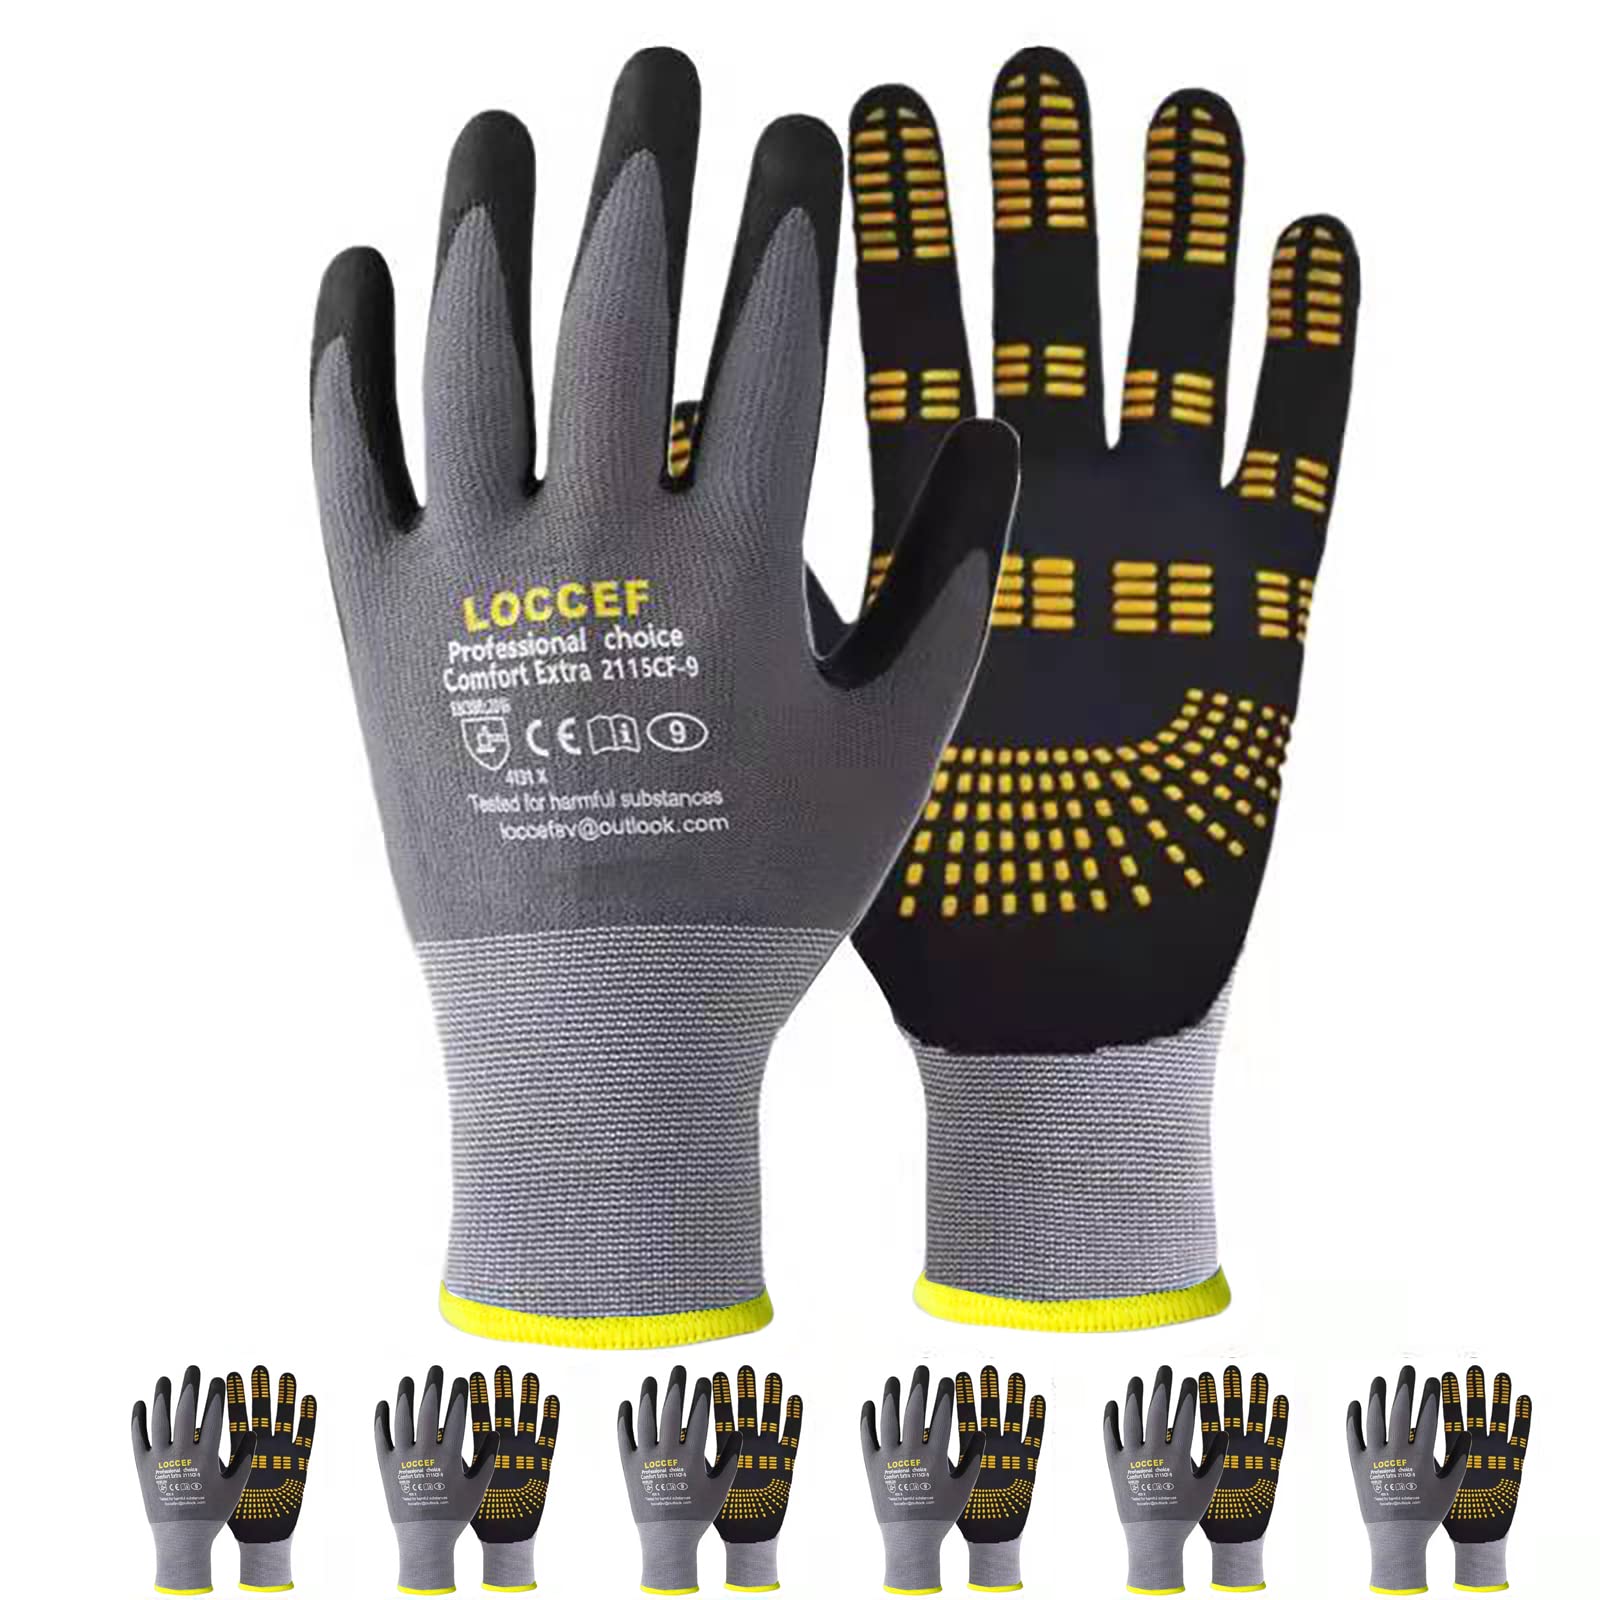 Loccef Endurance Knit Work Gloves Microfoam Nitrile Coated-6 Pairs,Tacky Dot Grip, Multi Purpose,Micro-Foam Gloves(11-Xxl)